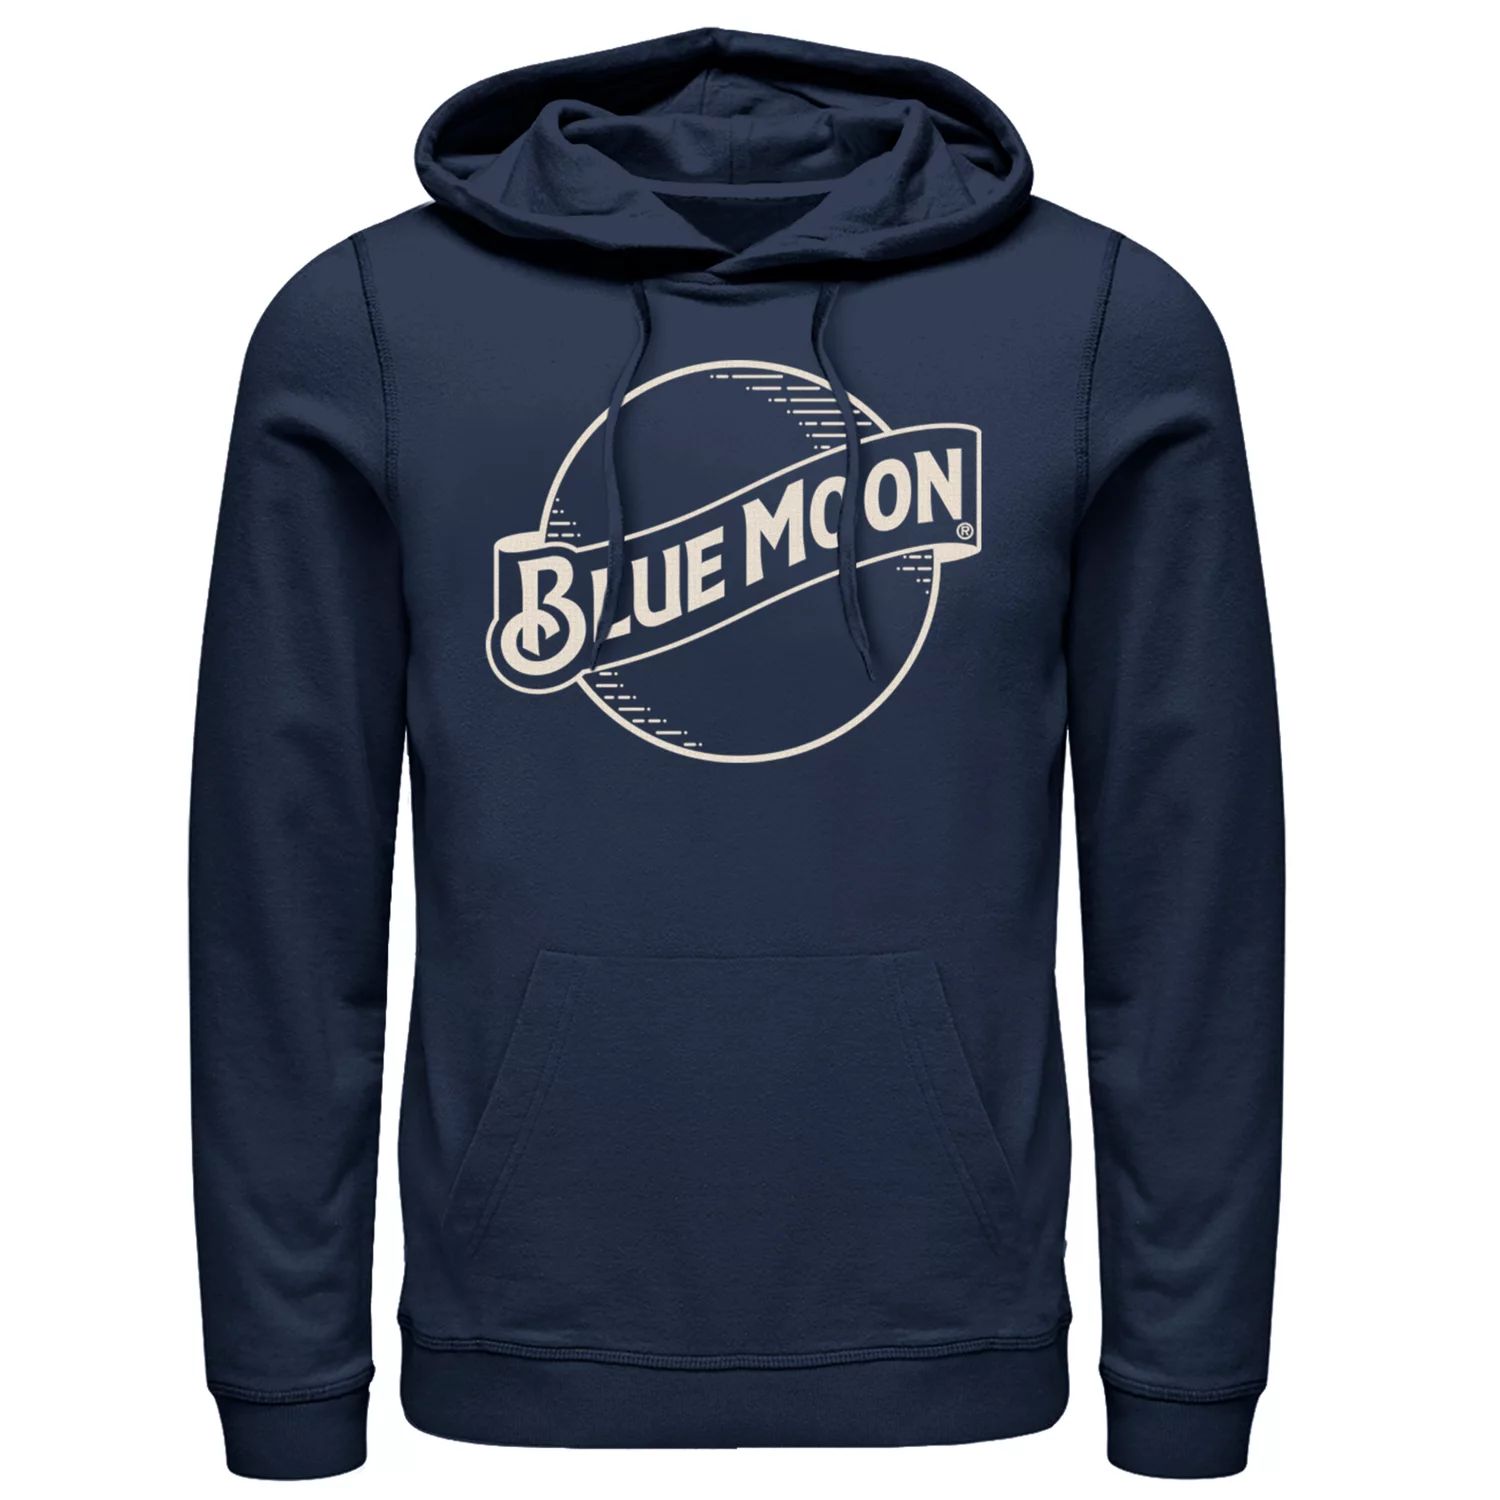 Мужской пуловер с капюшоном и логотипом Blue Moon Licensed Character